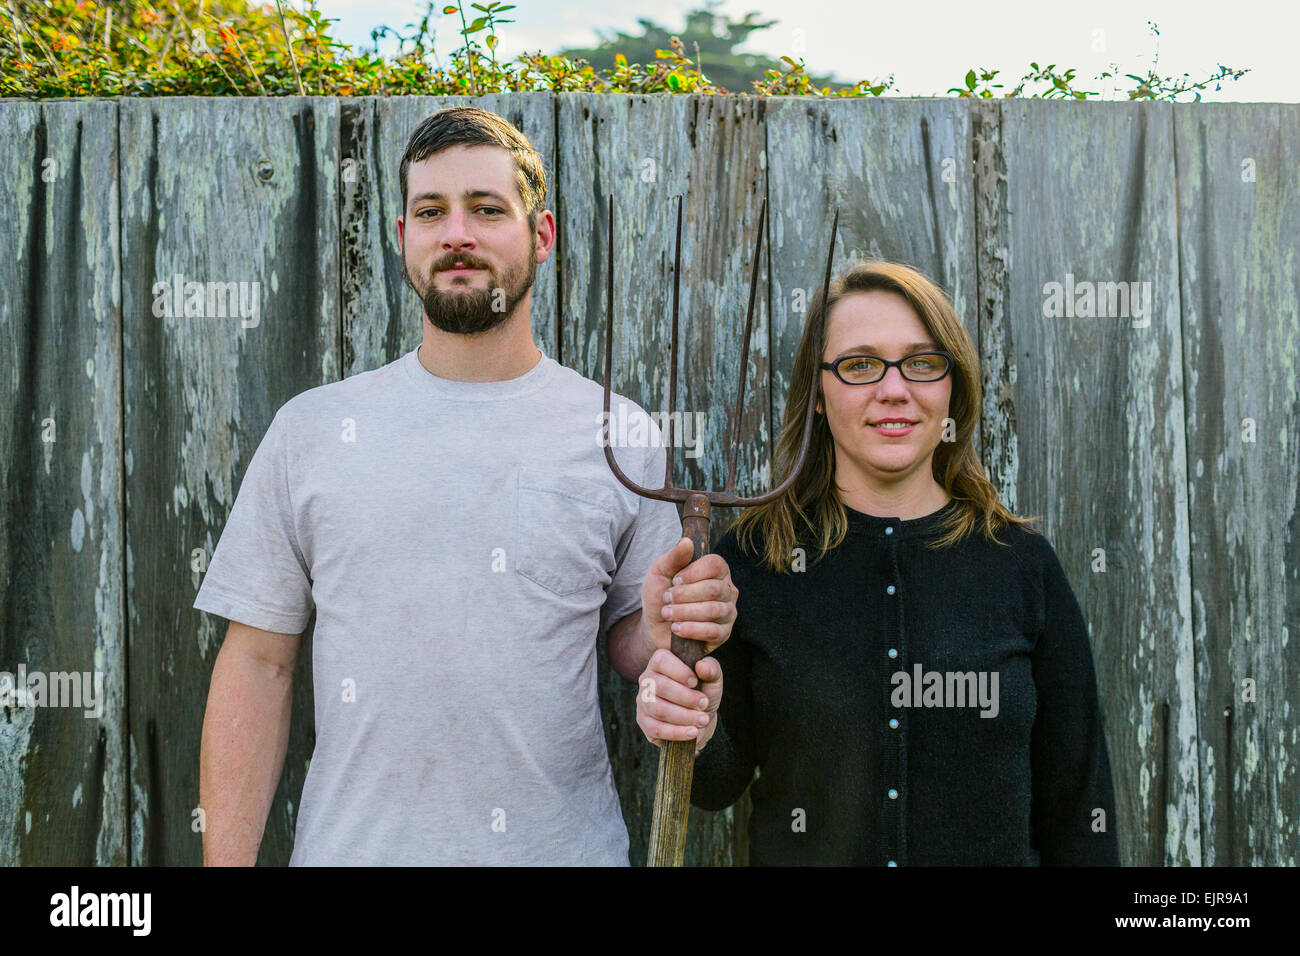 Caucasian couple holding pitchfork near fence Stock Photo